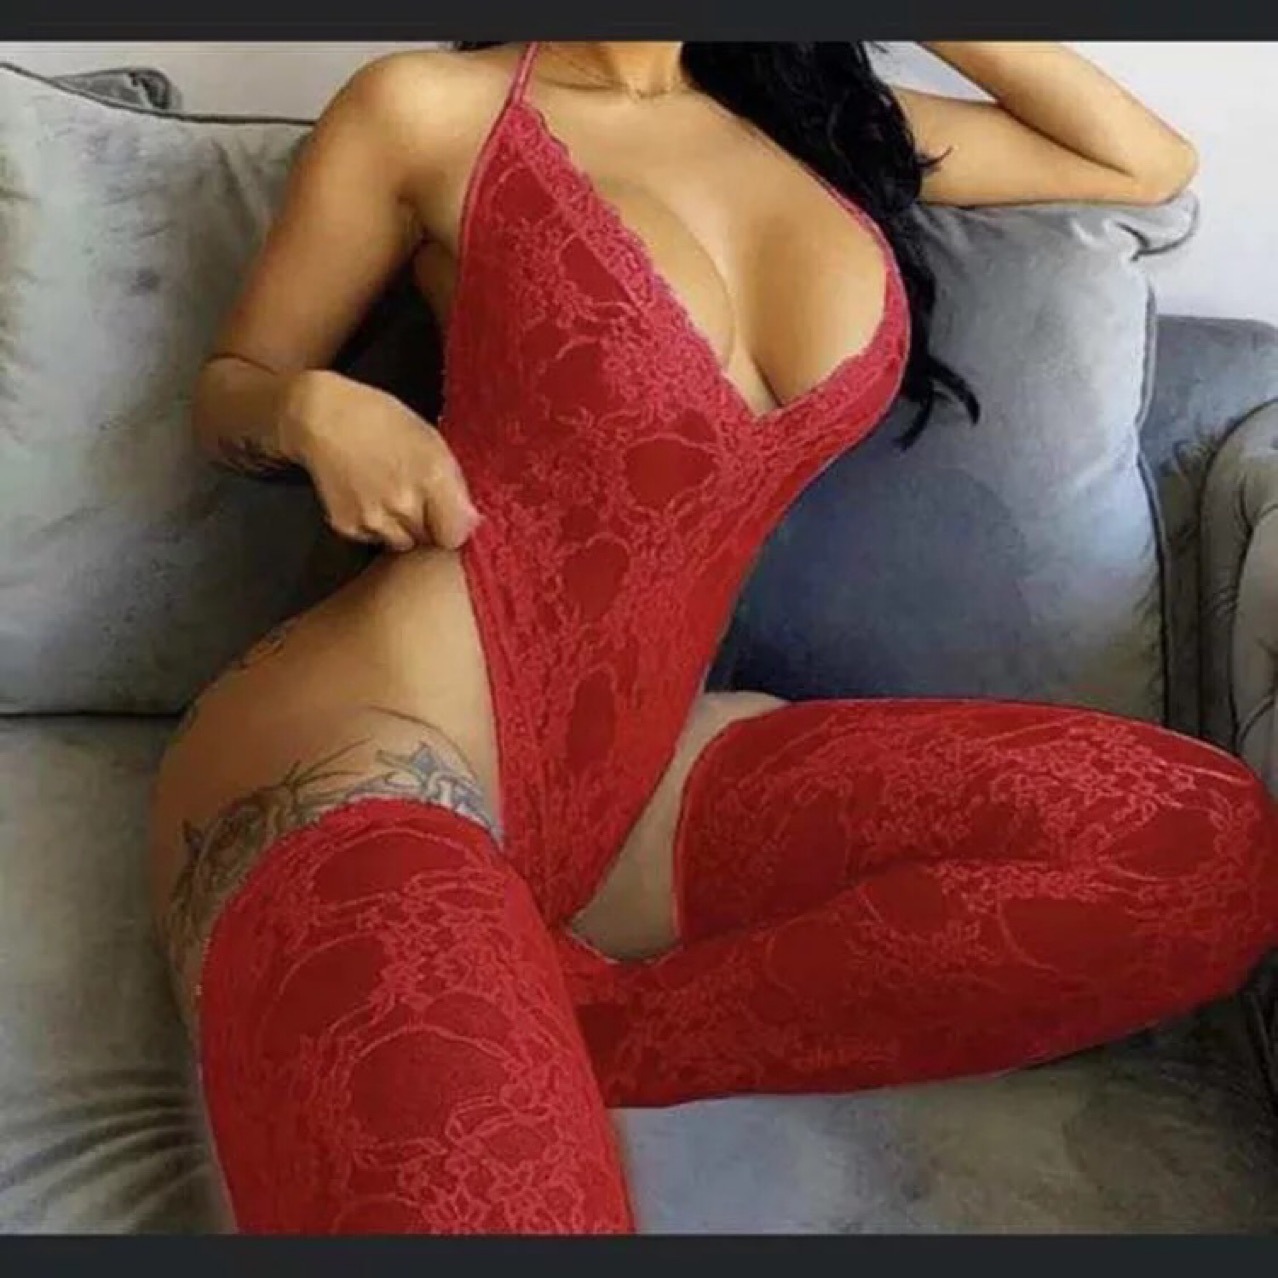 Set Pakaian Dalam Erotik Kostum Plus Saiz Renda 6 Warna Teddy Merah Dua Keping Baju Dalam Wanita Pakaian Dalam Wanita Dengan Stoking